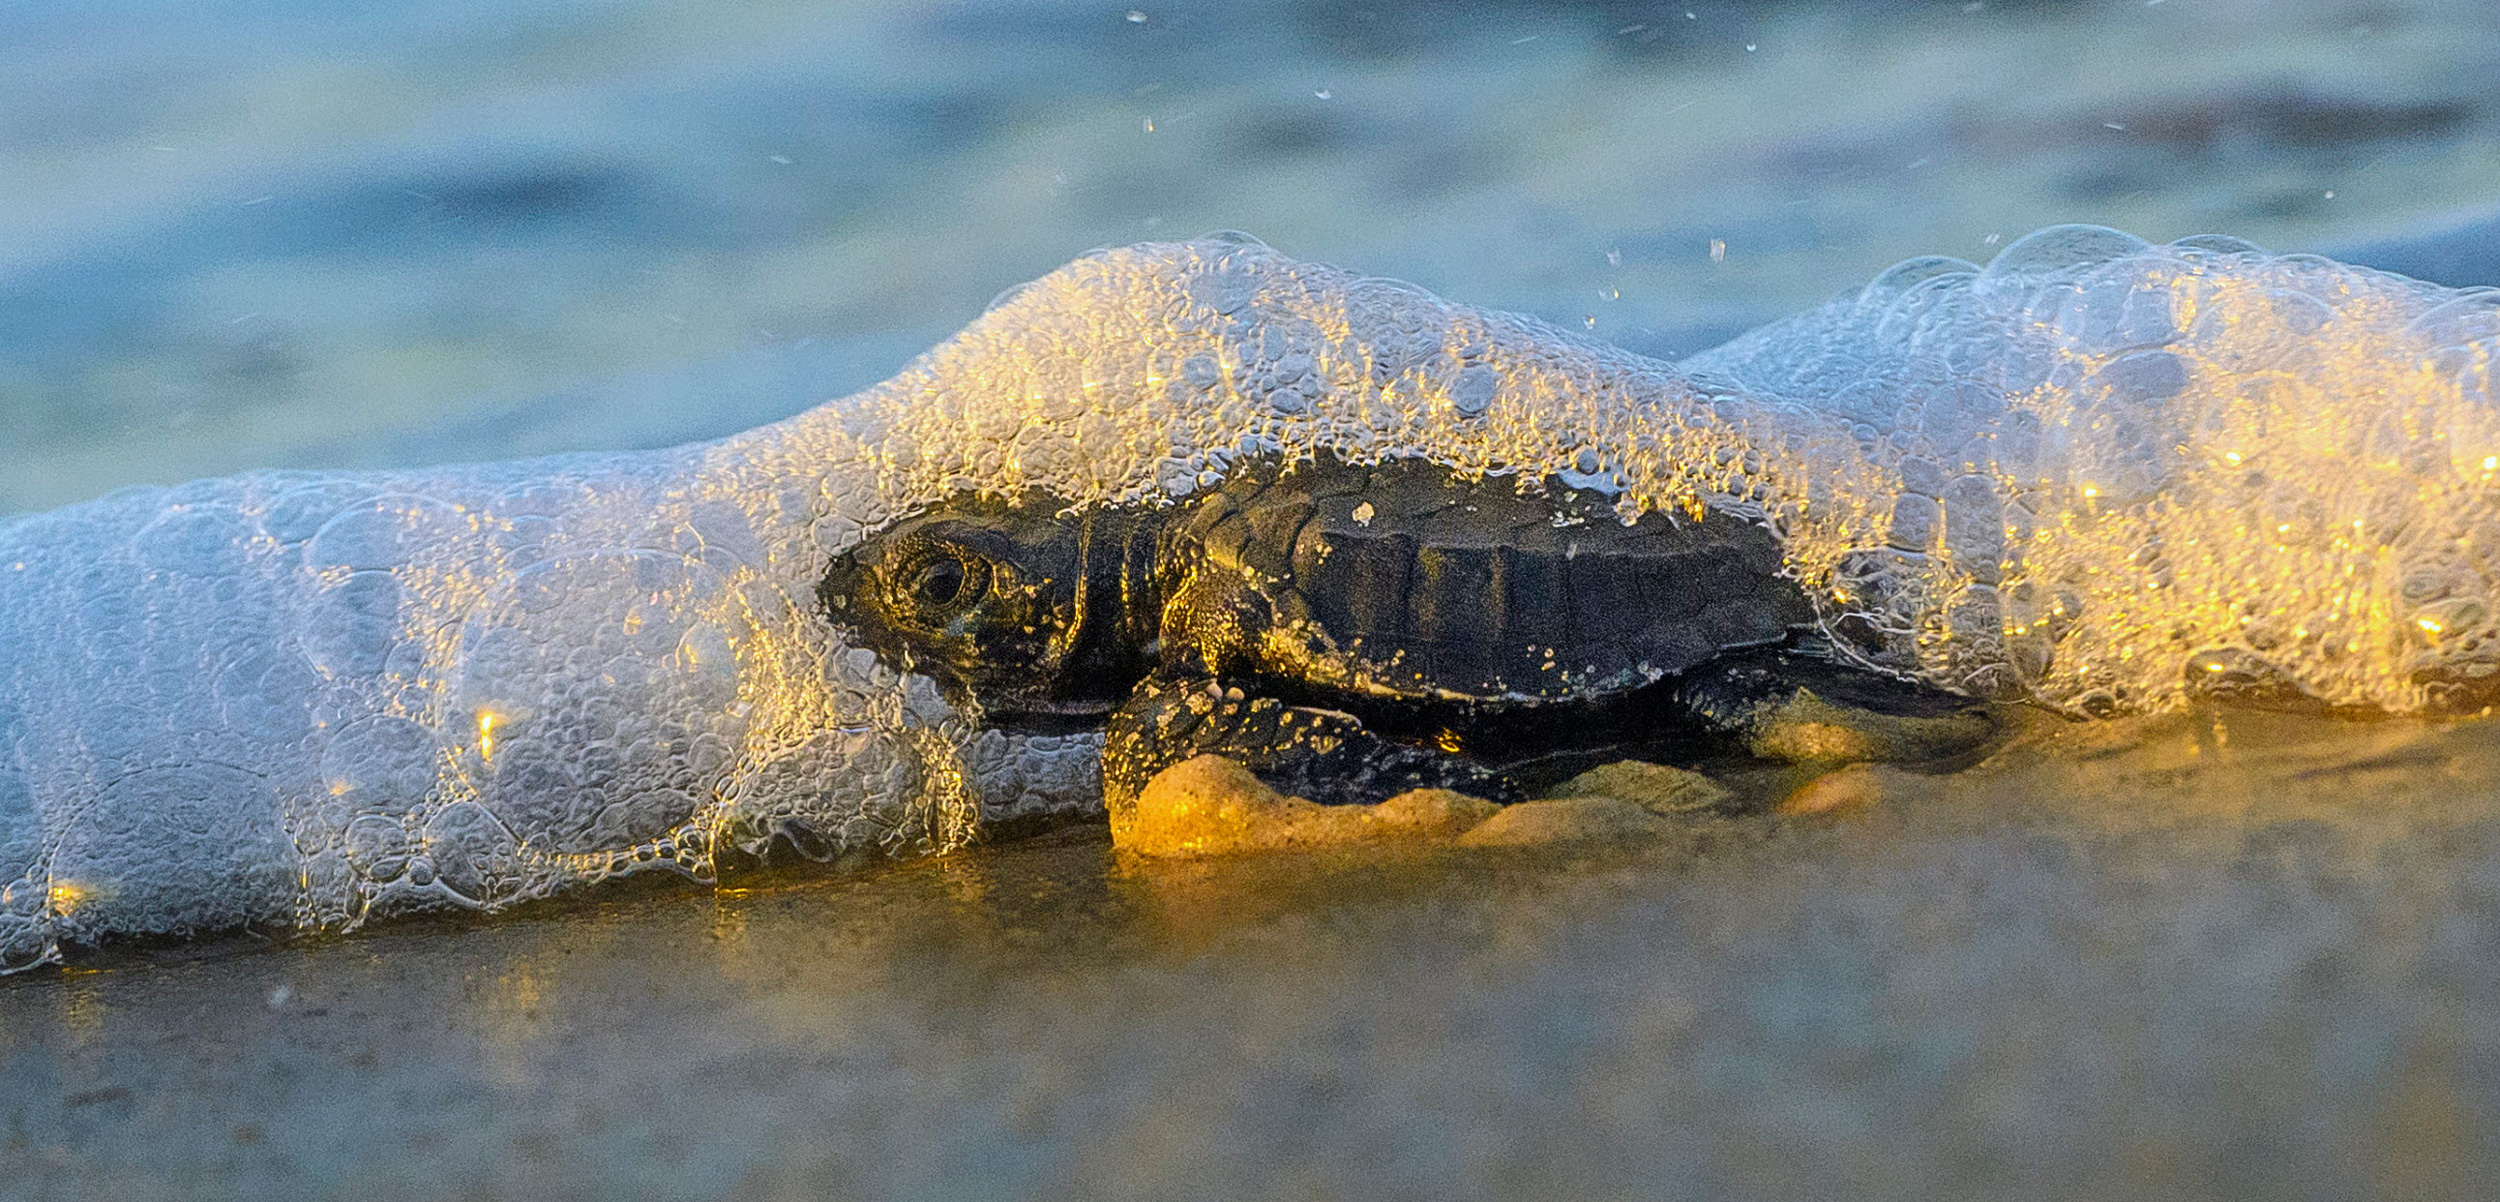 Atlantic Ridley Sea Turtle (Lepidochelys kempii) hatchling entering ocean